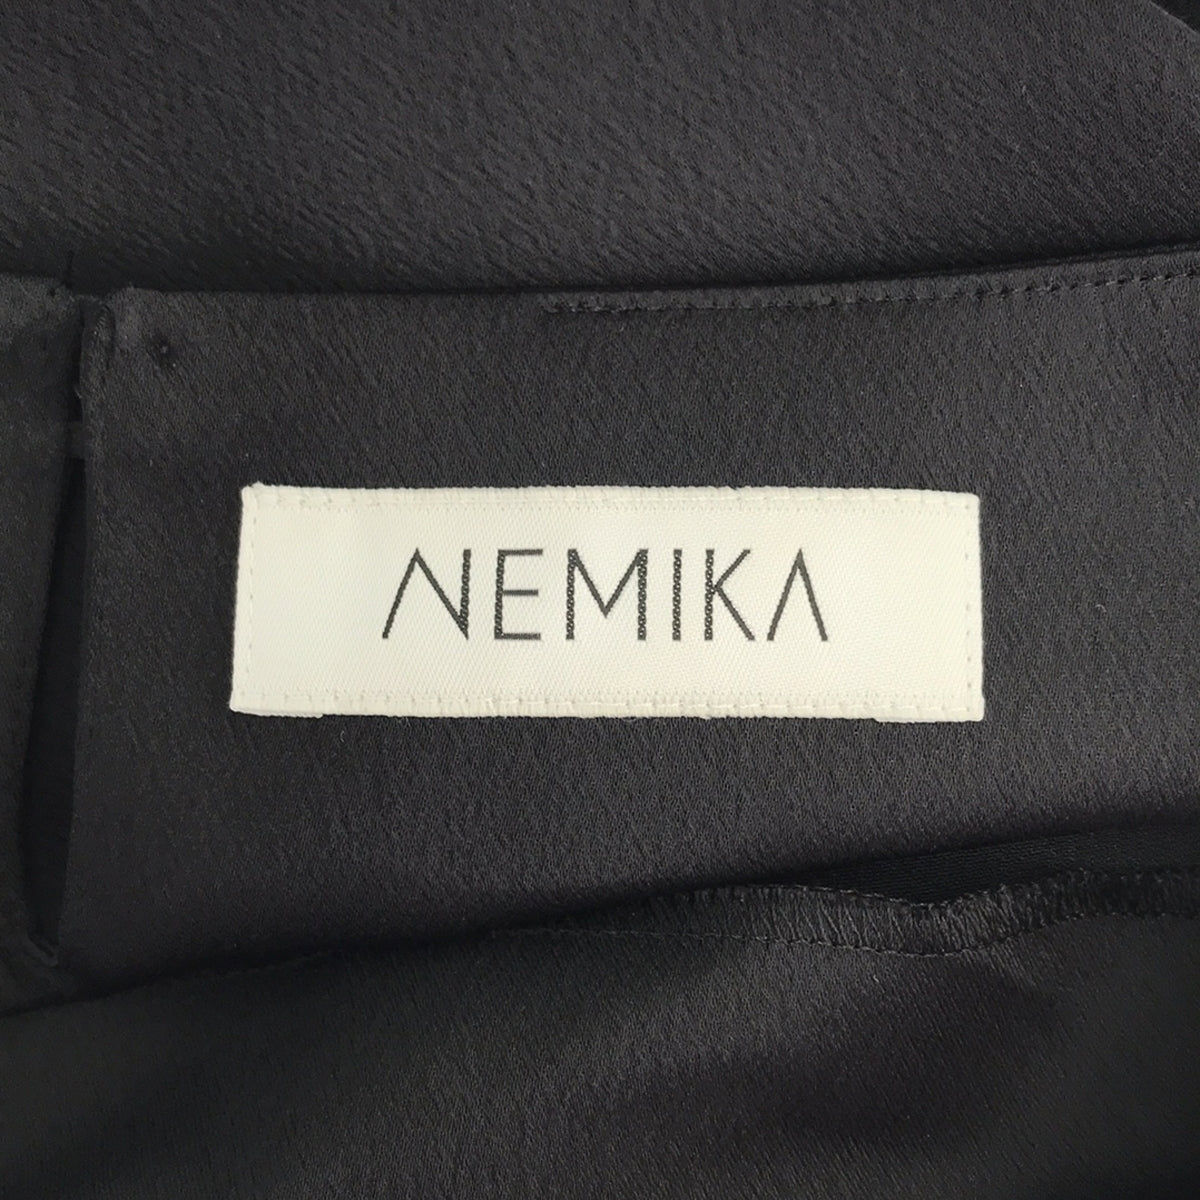 NEMIKA / ネミカ | セットアップ フリンジ バルーンスリーブブラウス スカート | 9 | ブラック | レディース